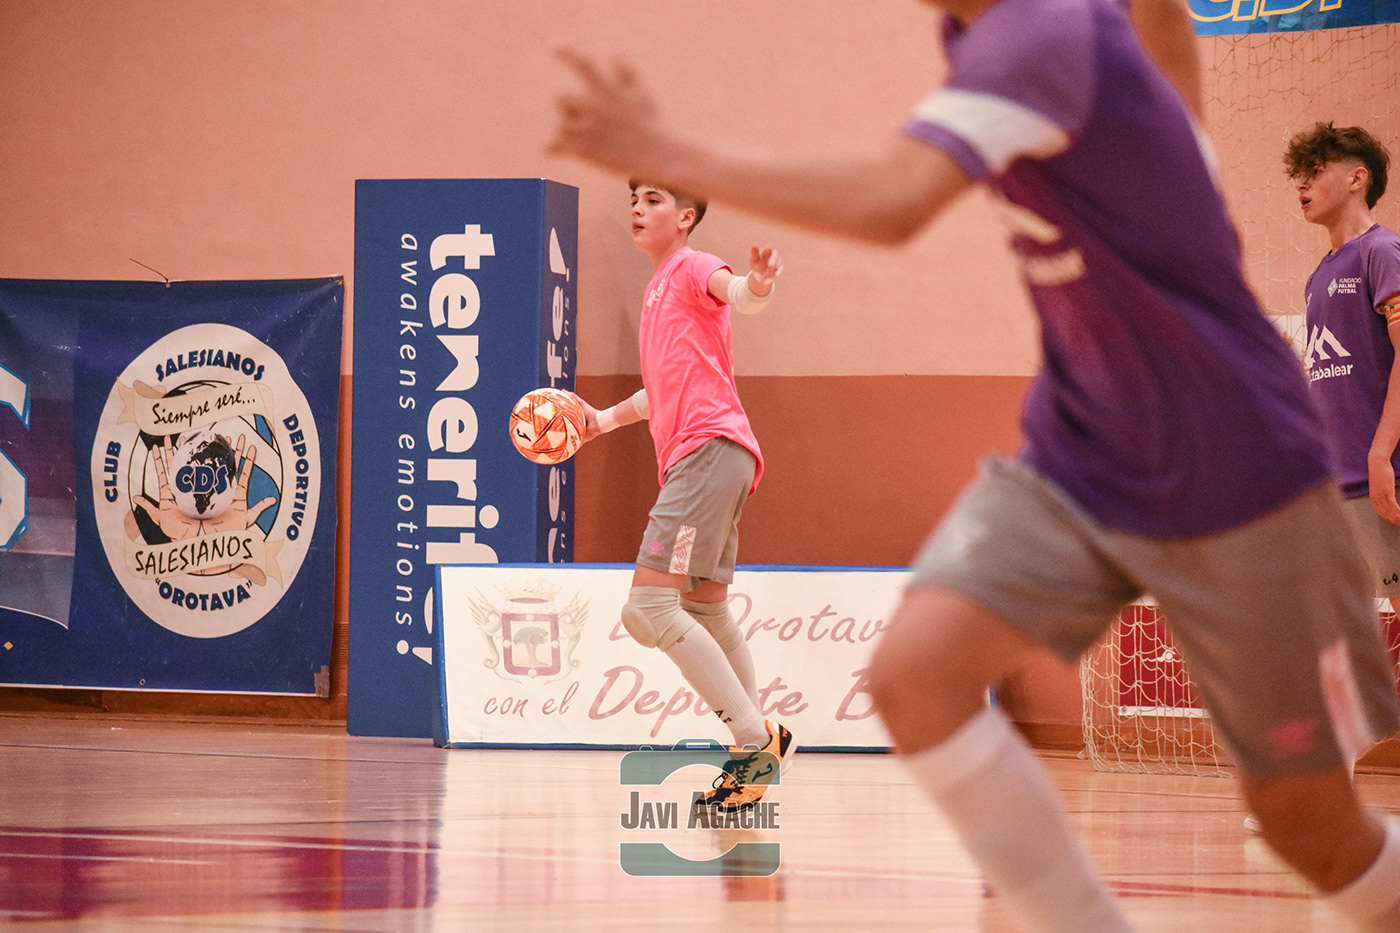 ElPozo Murcia Fisiomedia Manacor futsal Palma Futsal Torneo Mateo Hdez